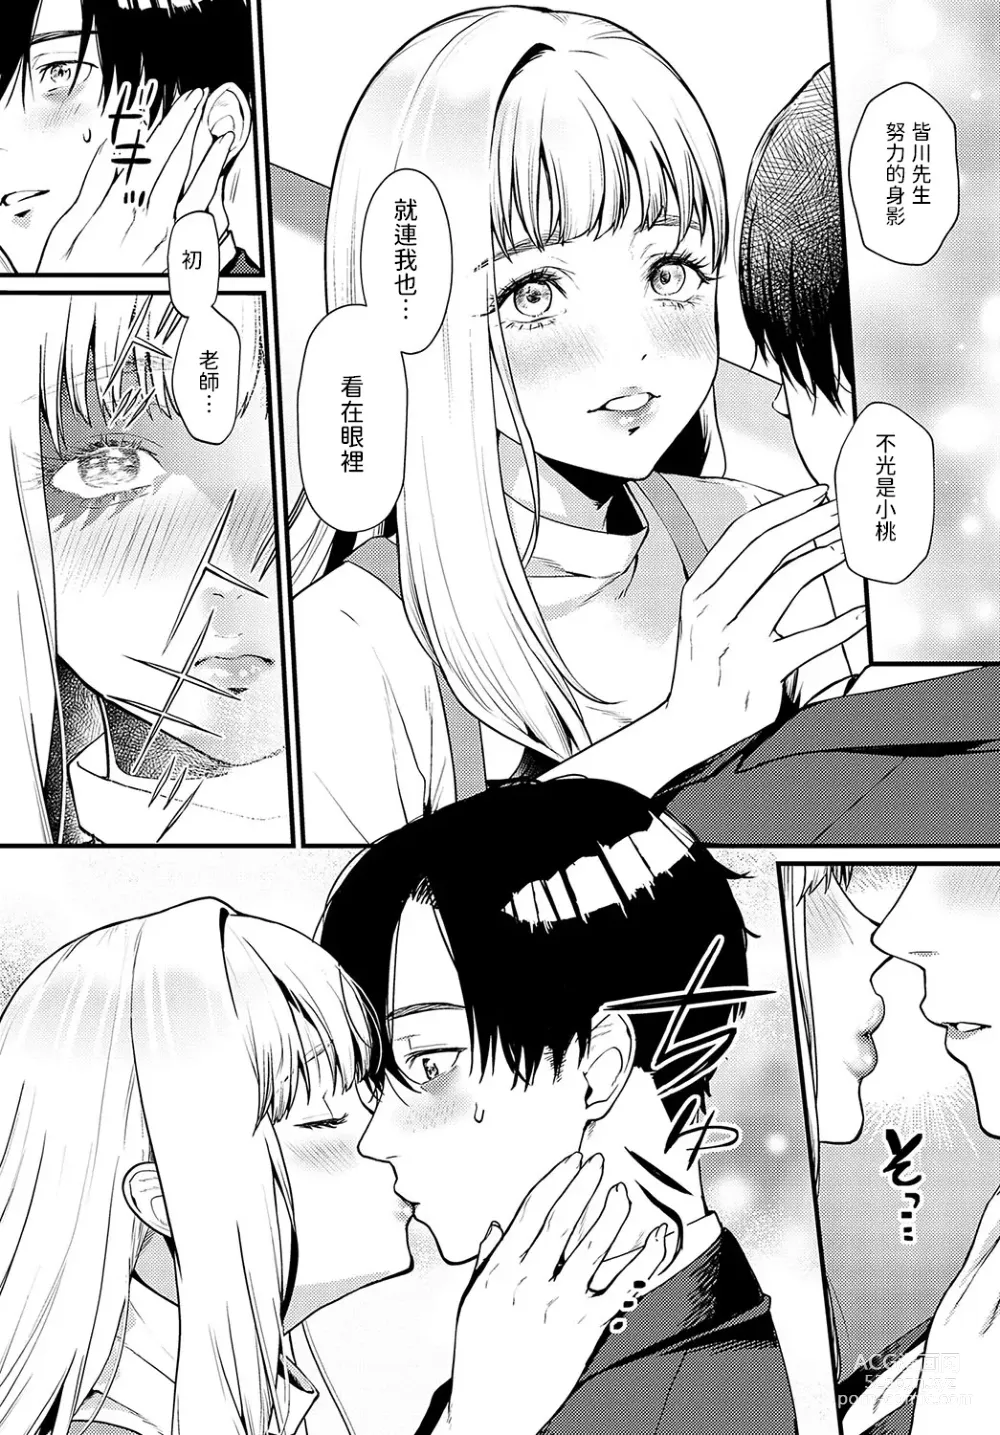 Page 5 of manga Yuuwaku Sweets Home